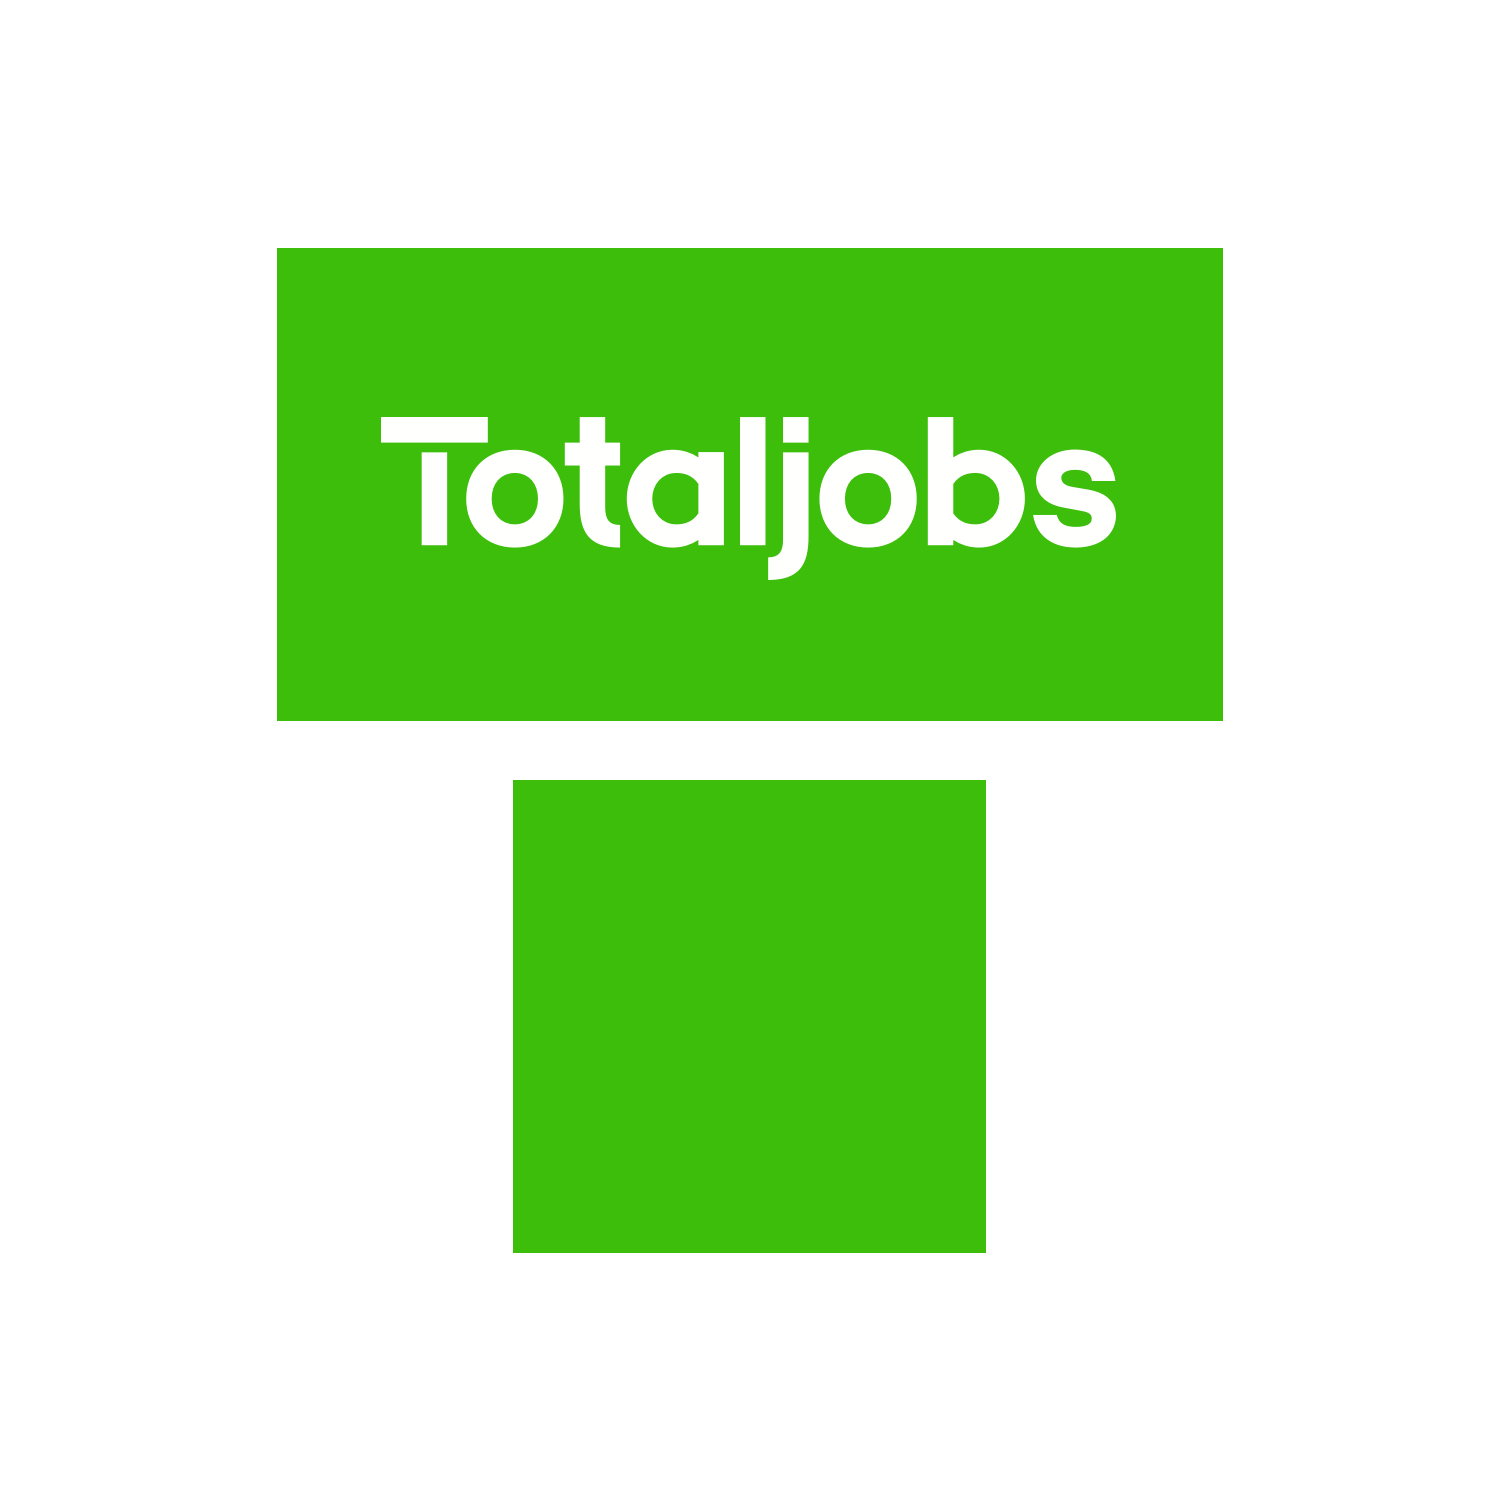 Jobs are our job | Totaljobs